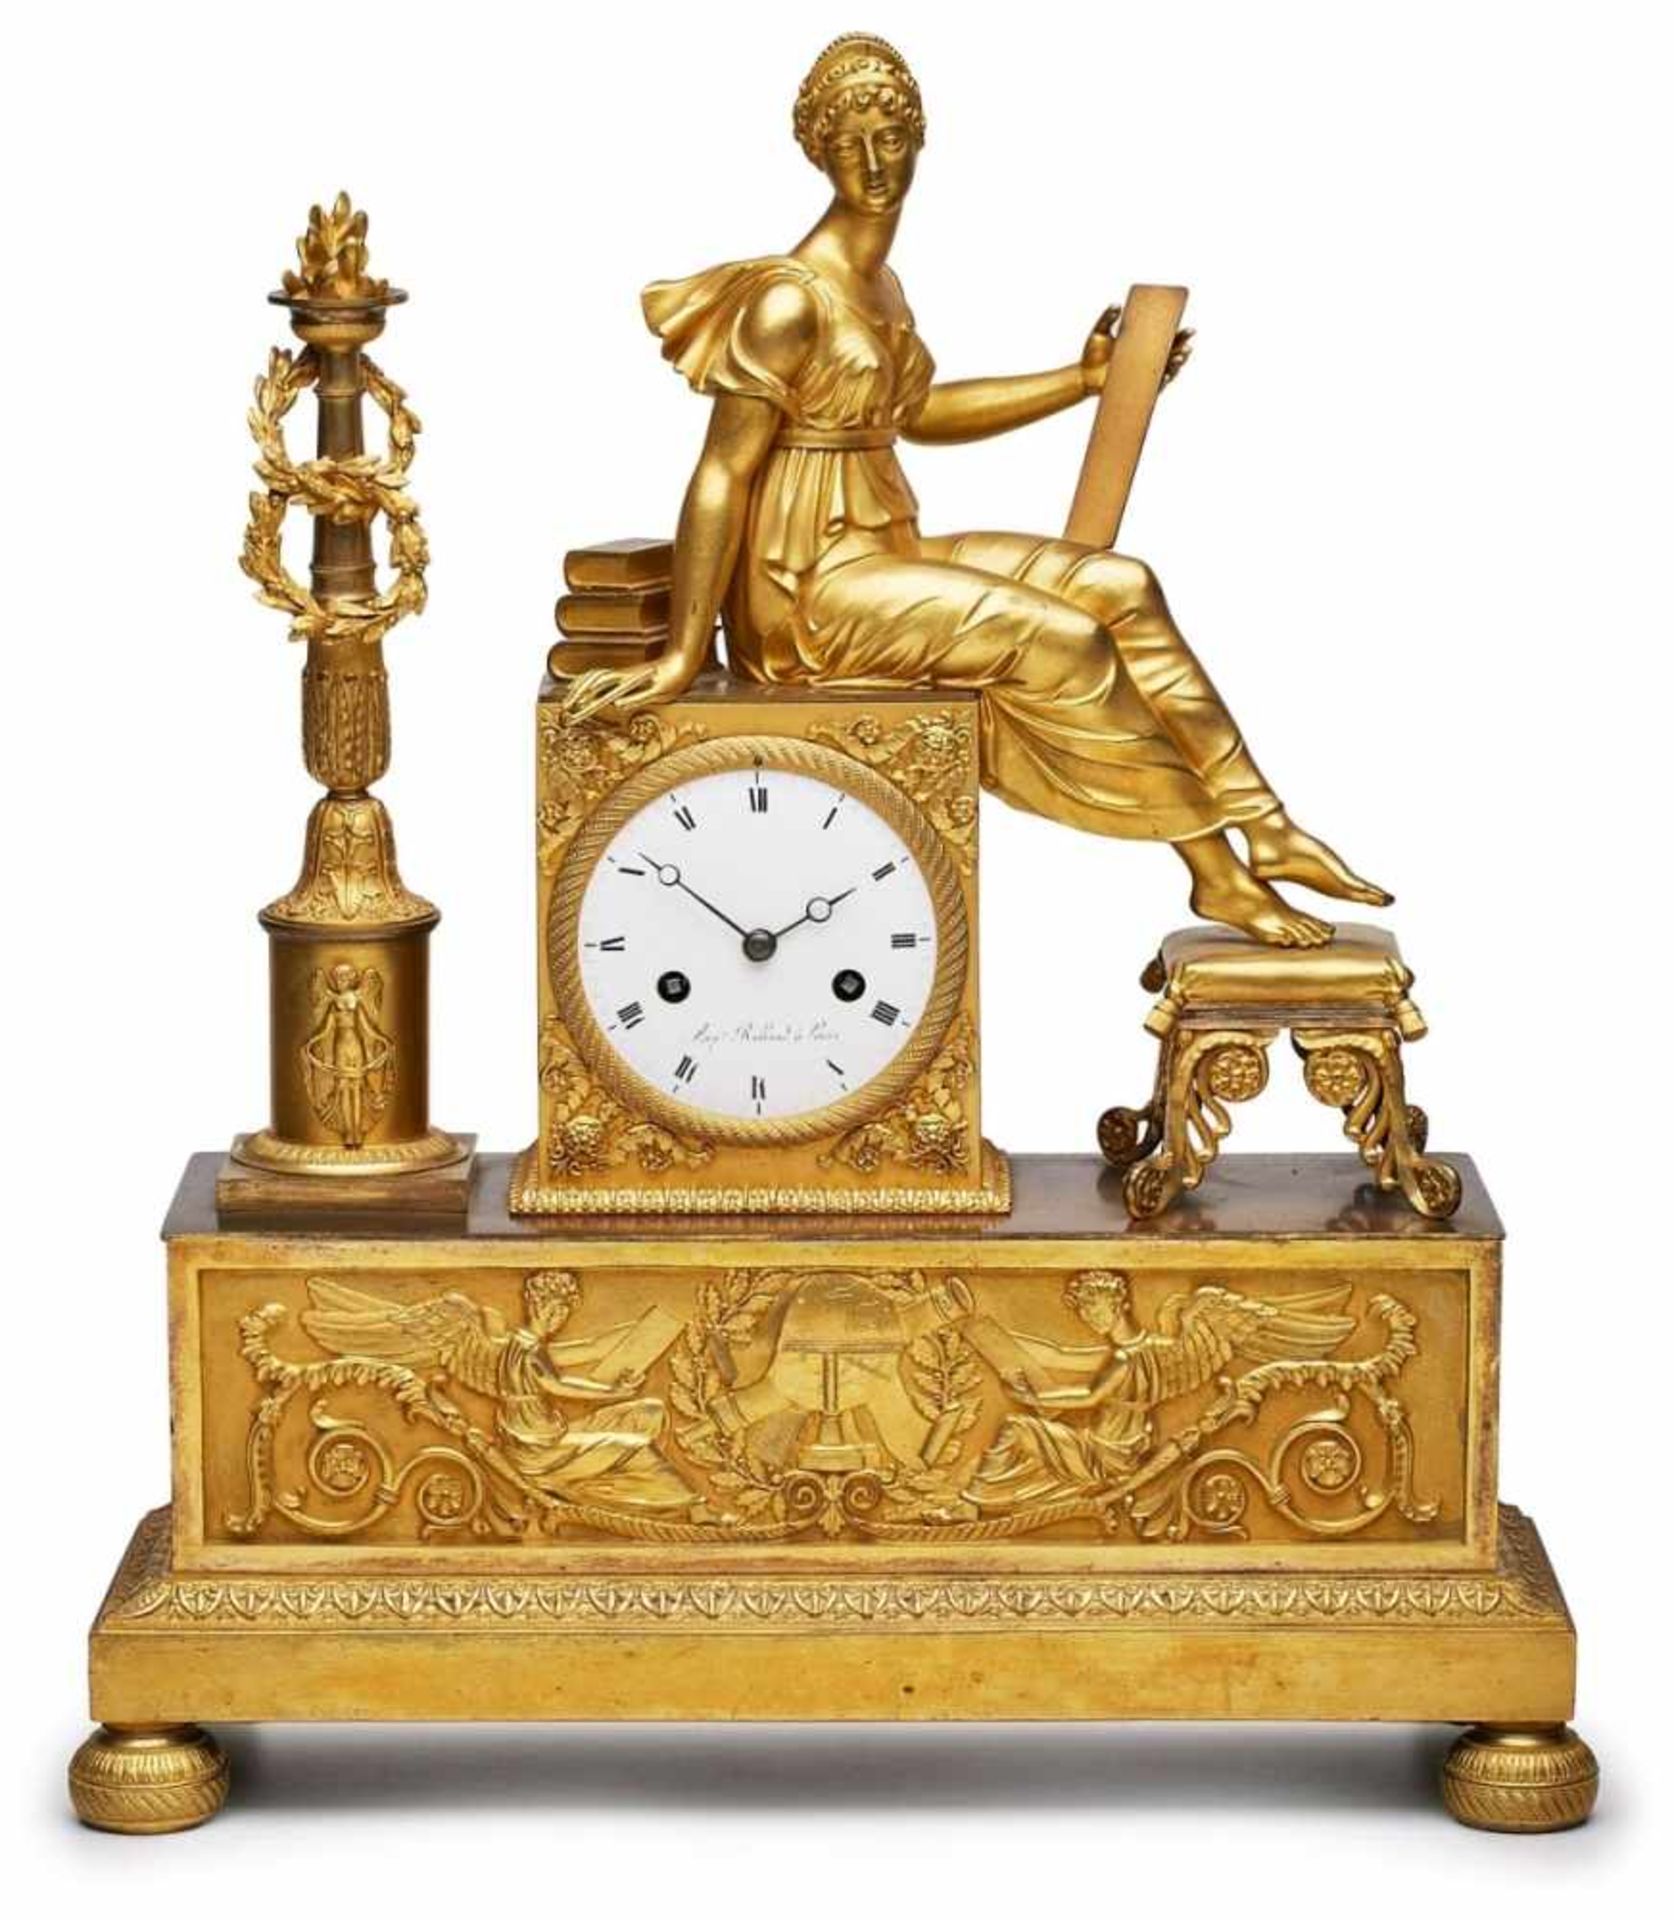 Gr. Empire-Figurenuhr um 1810-15.Bronze feuervergoldet. Hoher rechteckiger, abgetreppter u.